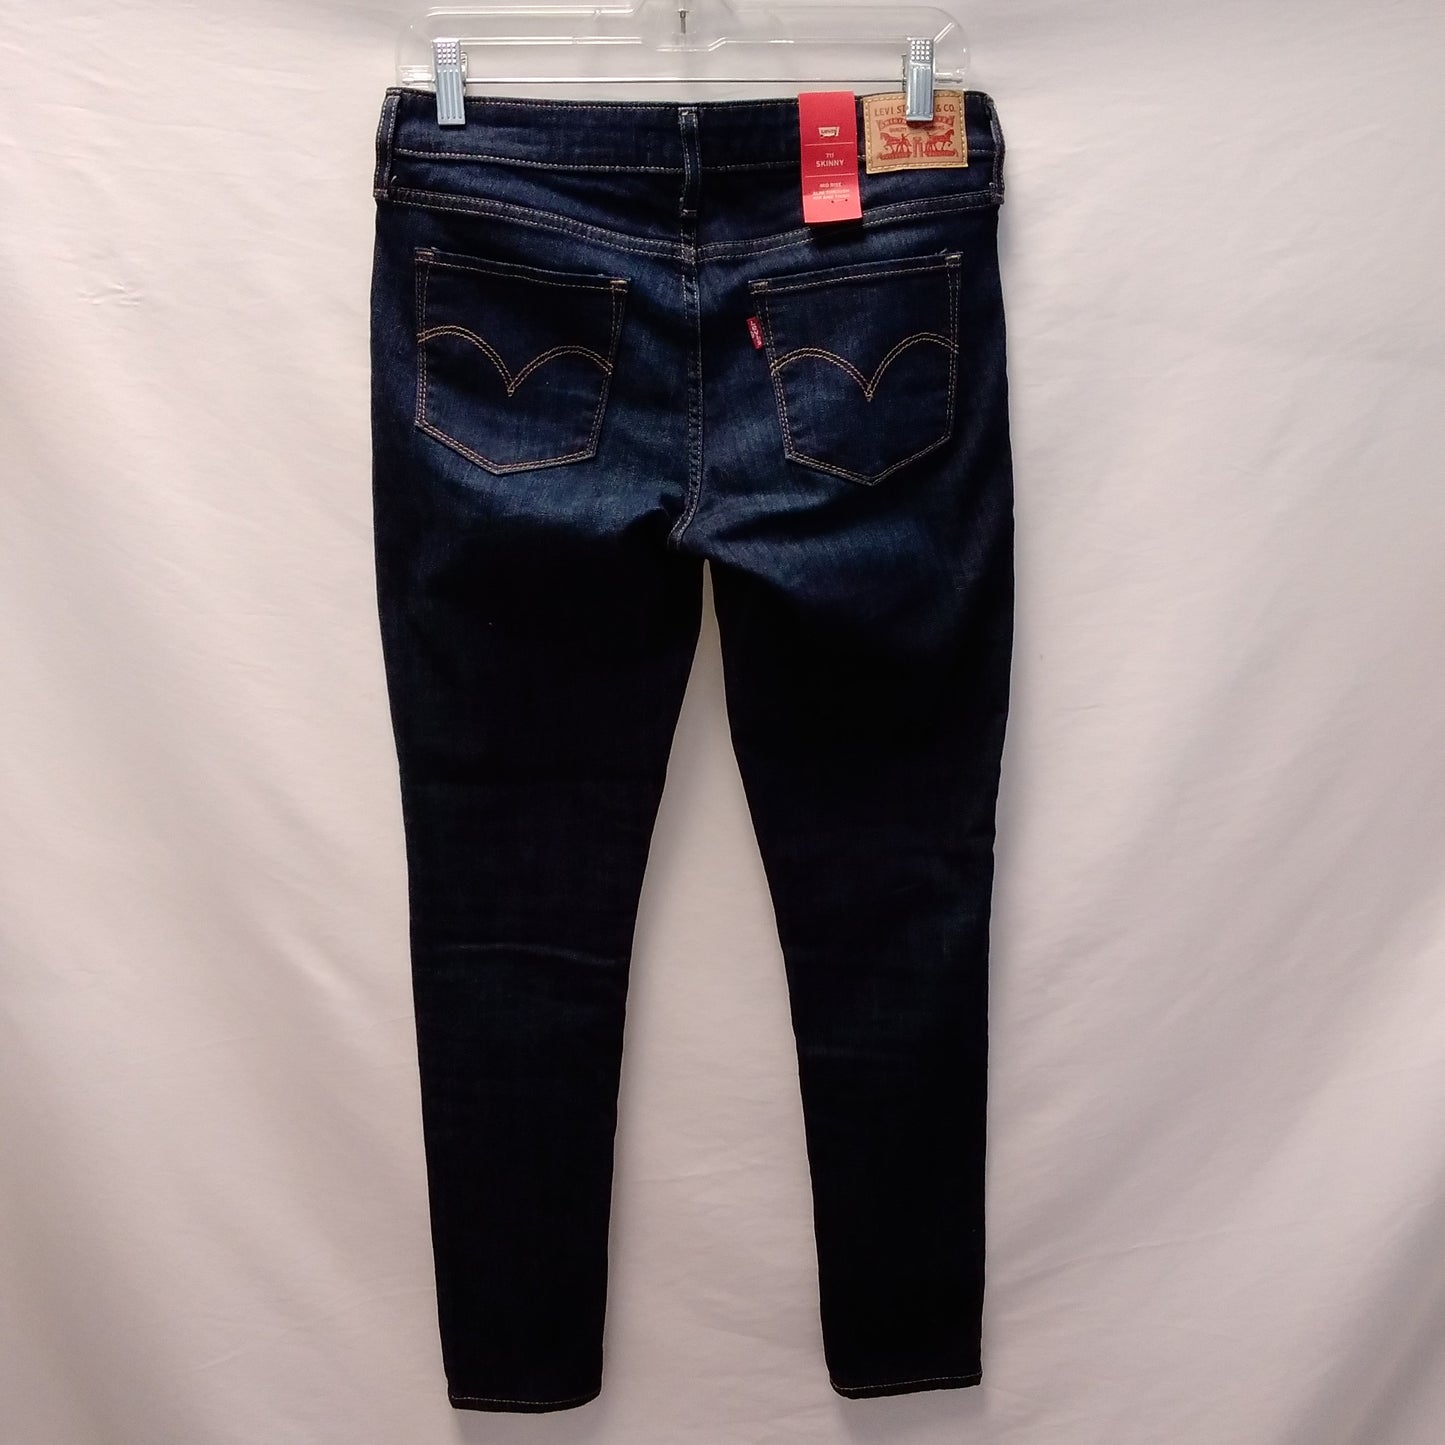 NWT - Levi's 711 Mid-Rise Skinny Jeans - 28x30